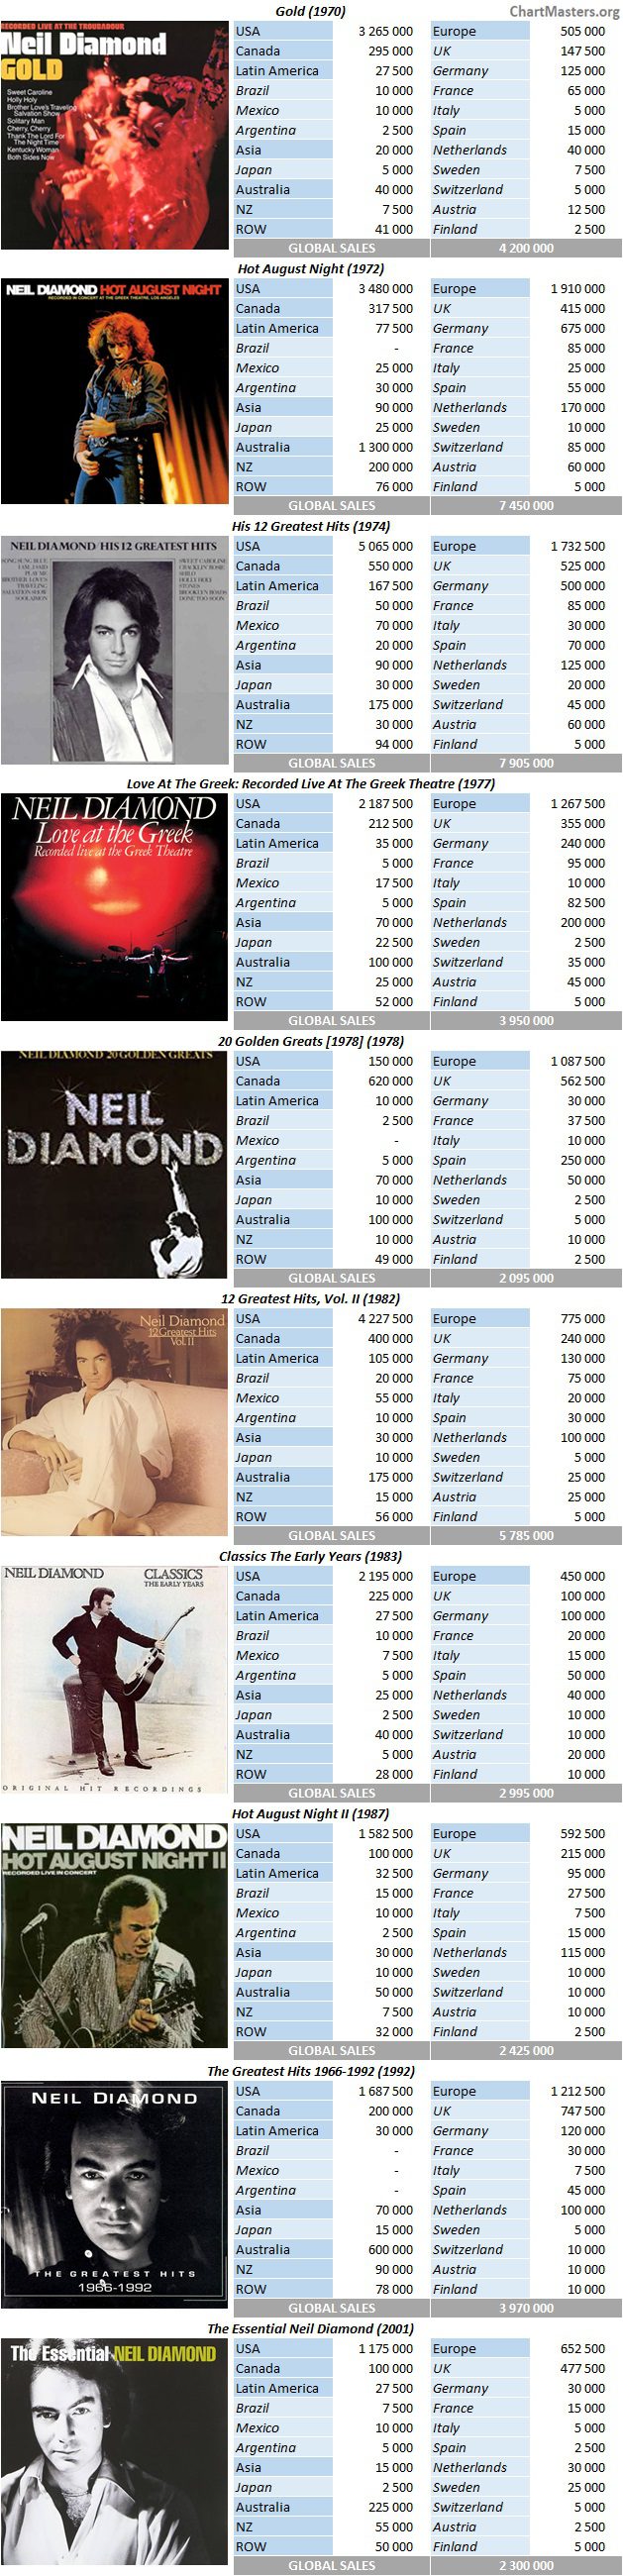 CSPC Neil Diamond top selling compilations breakdowns